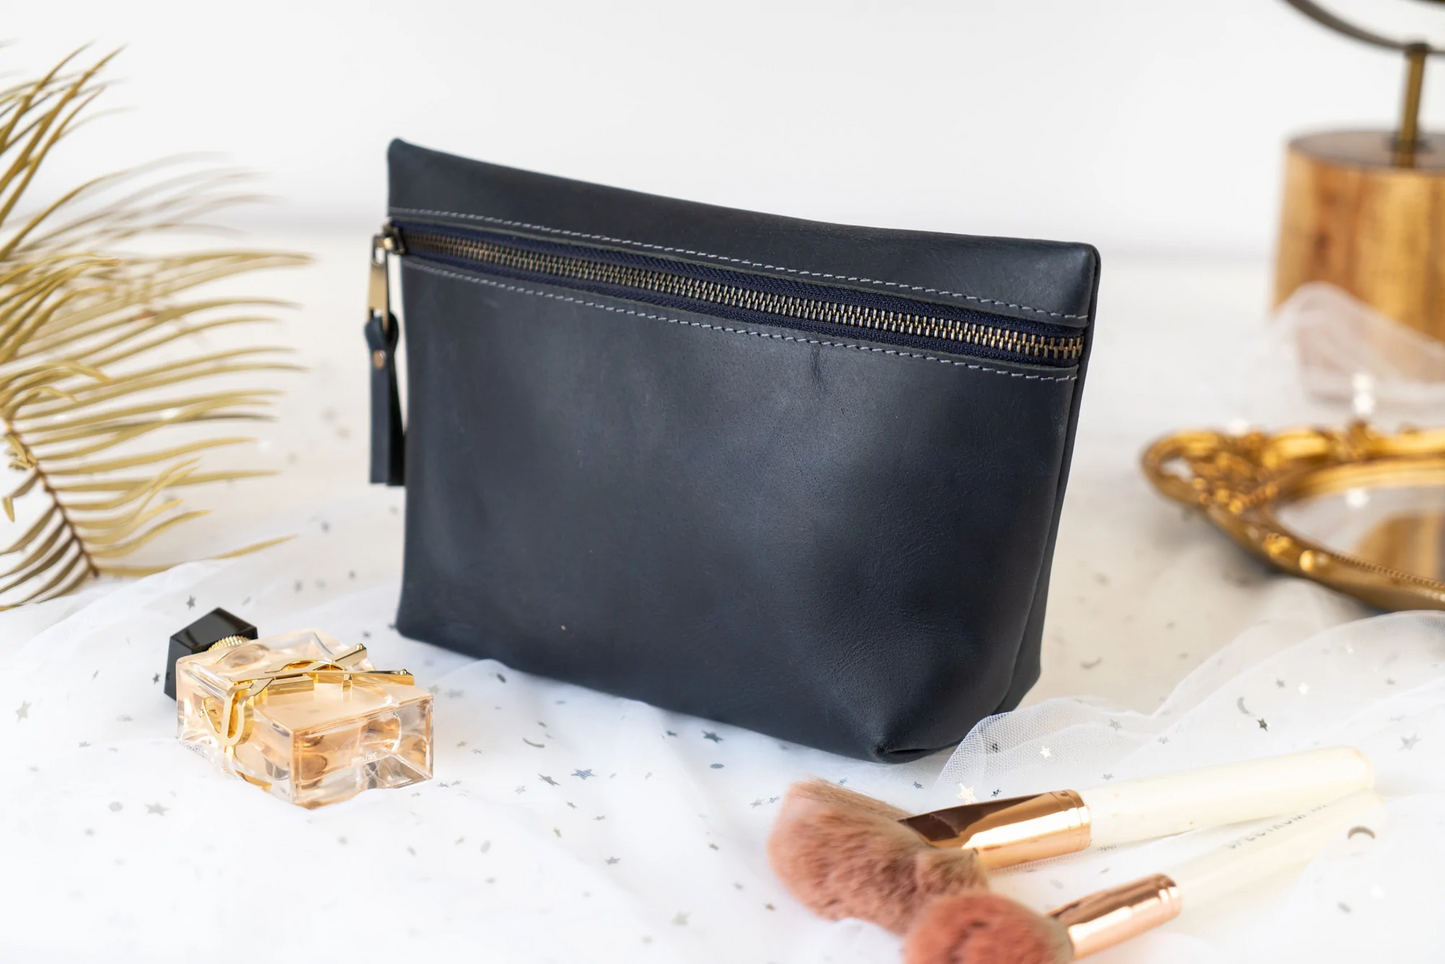 Leather Square Makeup Bag | Antique Brown